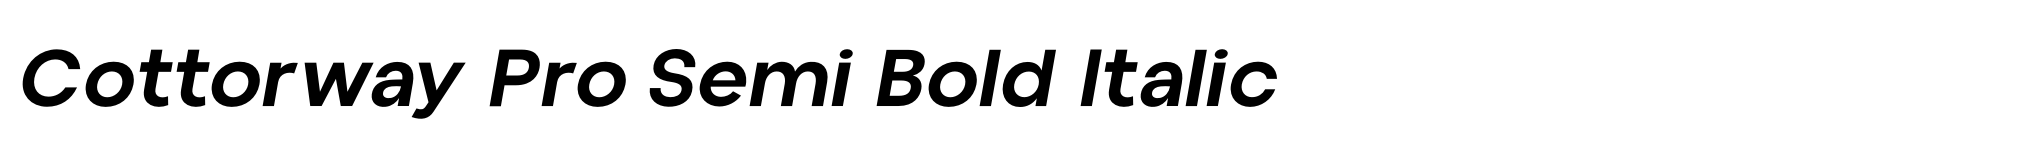 Cottorway Pro Semi Bold Italic image